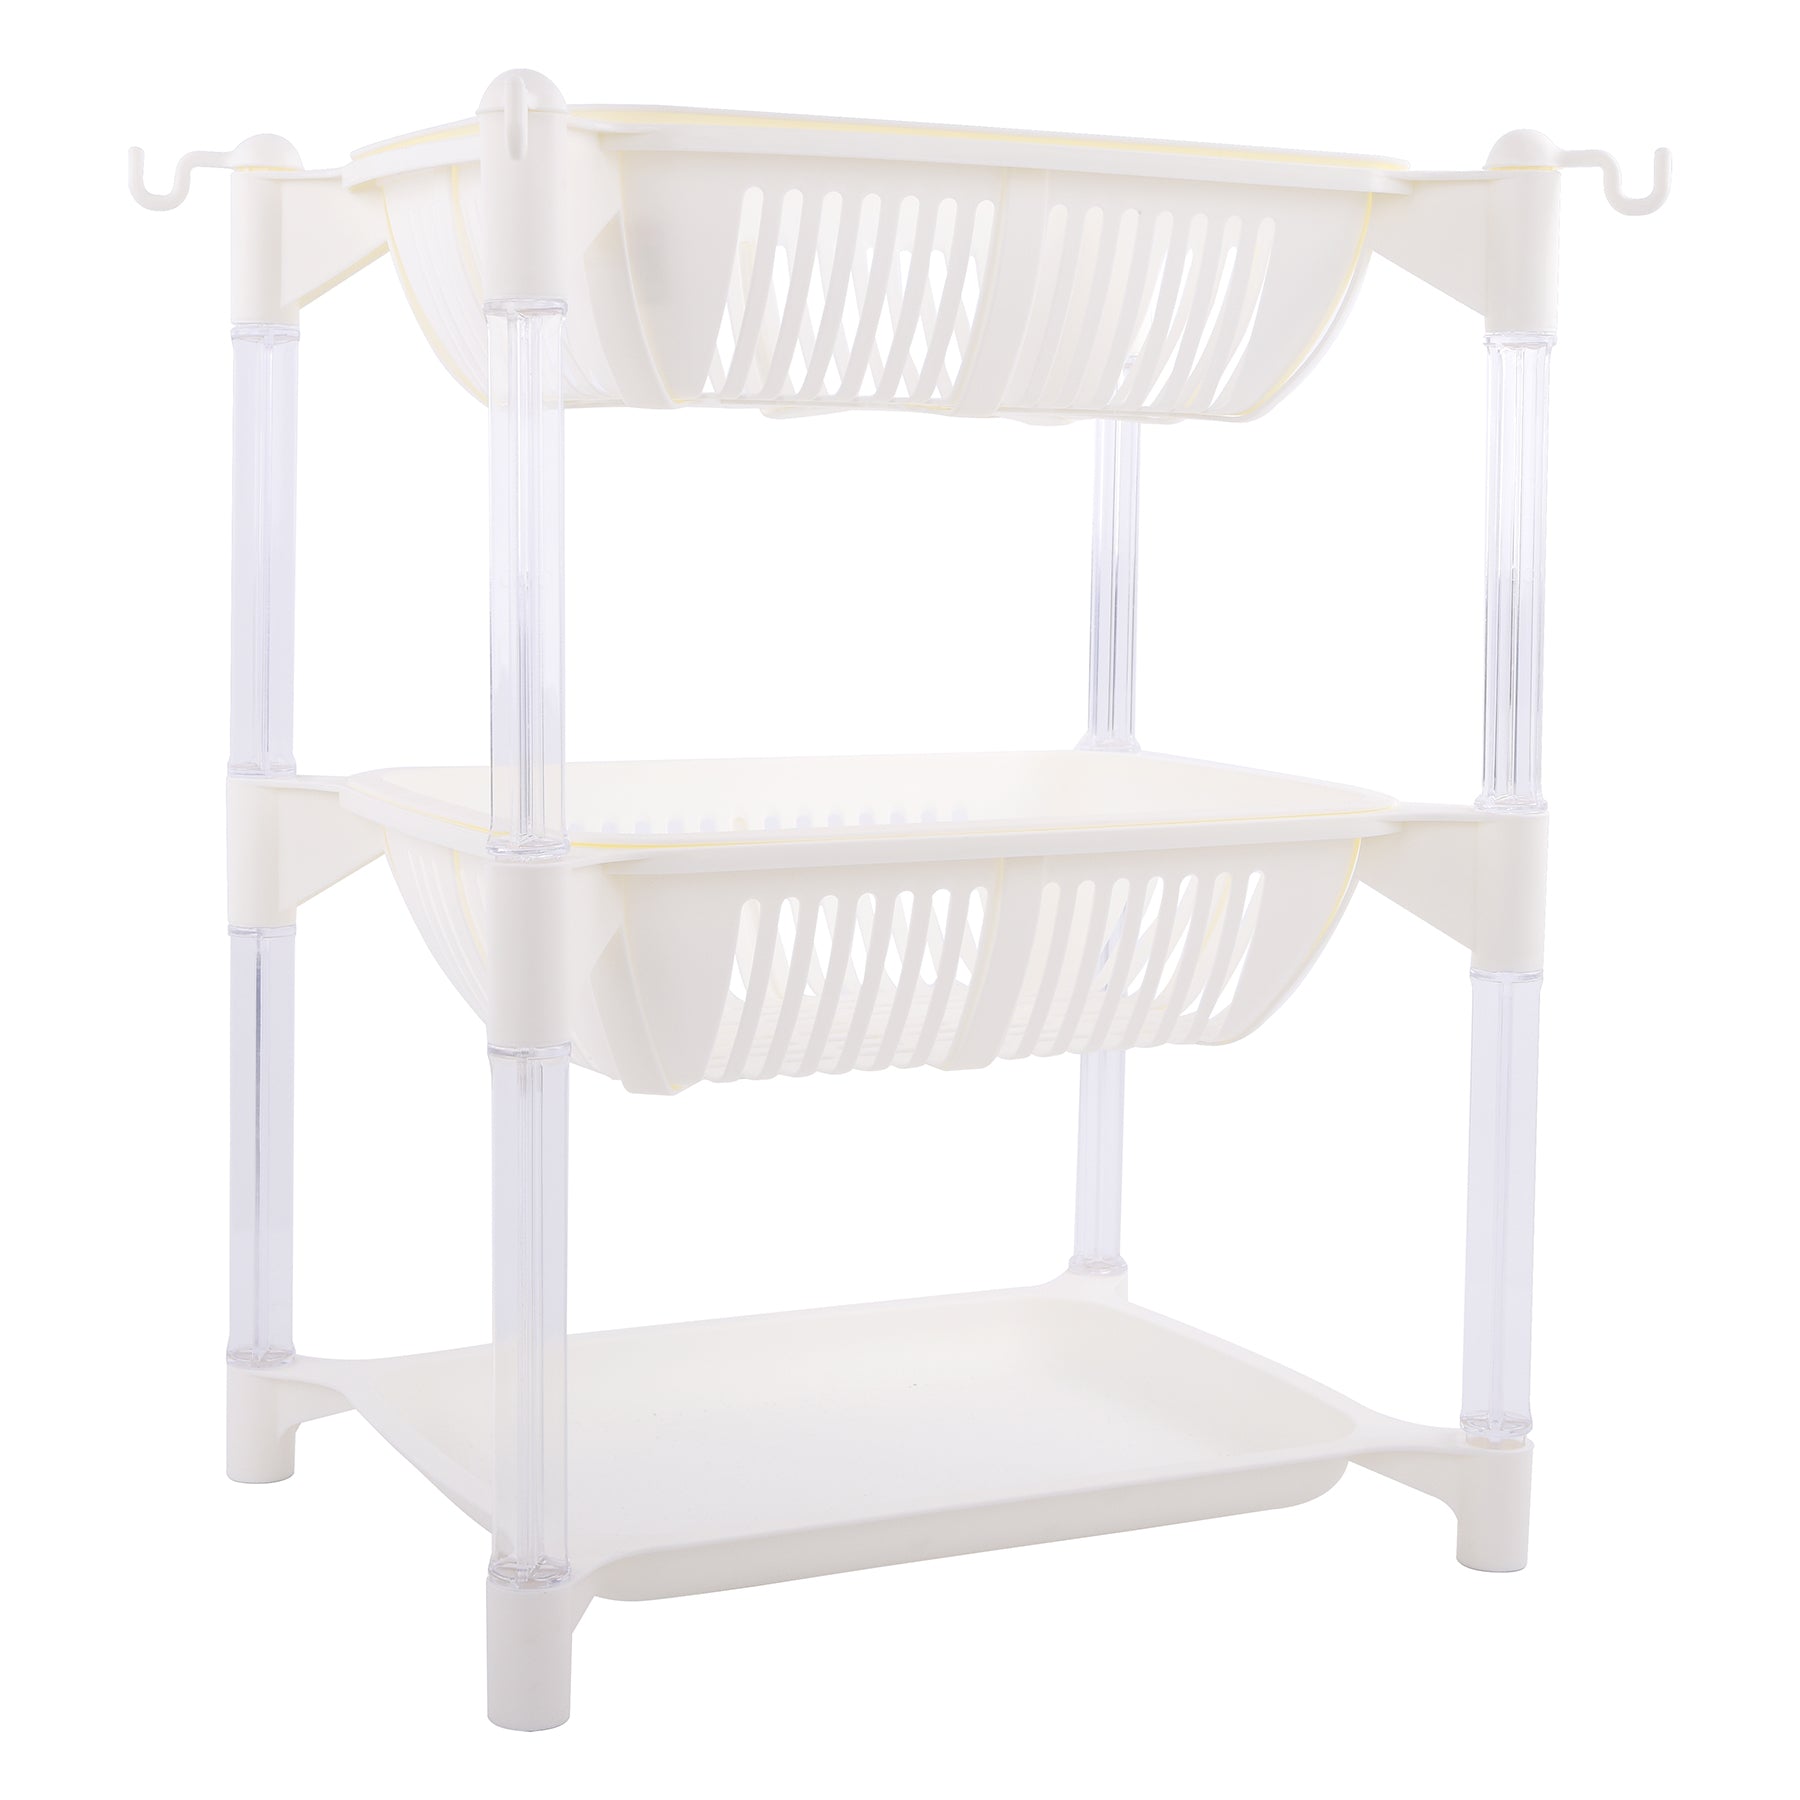 2 Tier plastic storage basket , White color.